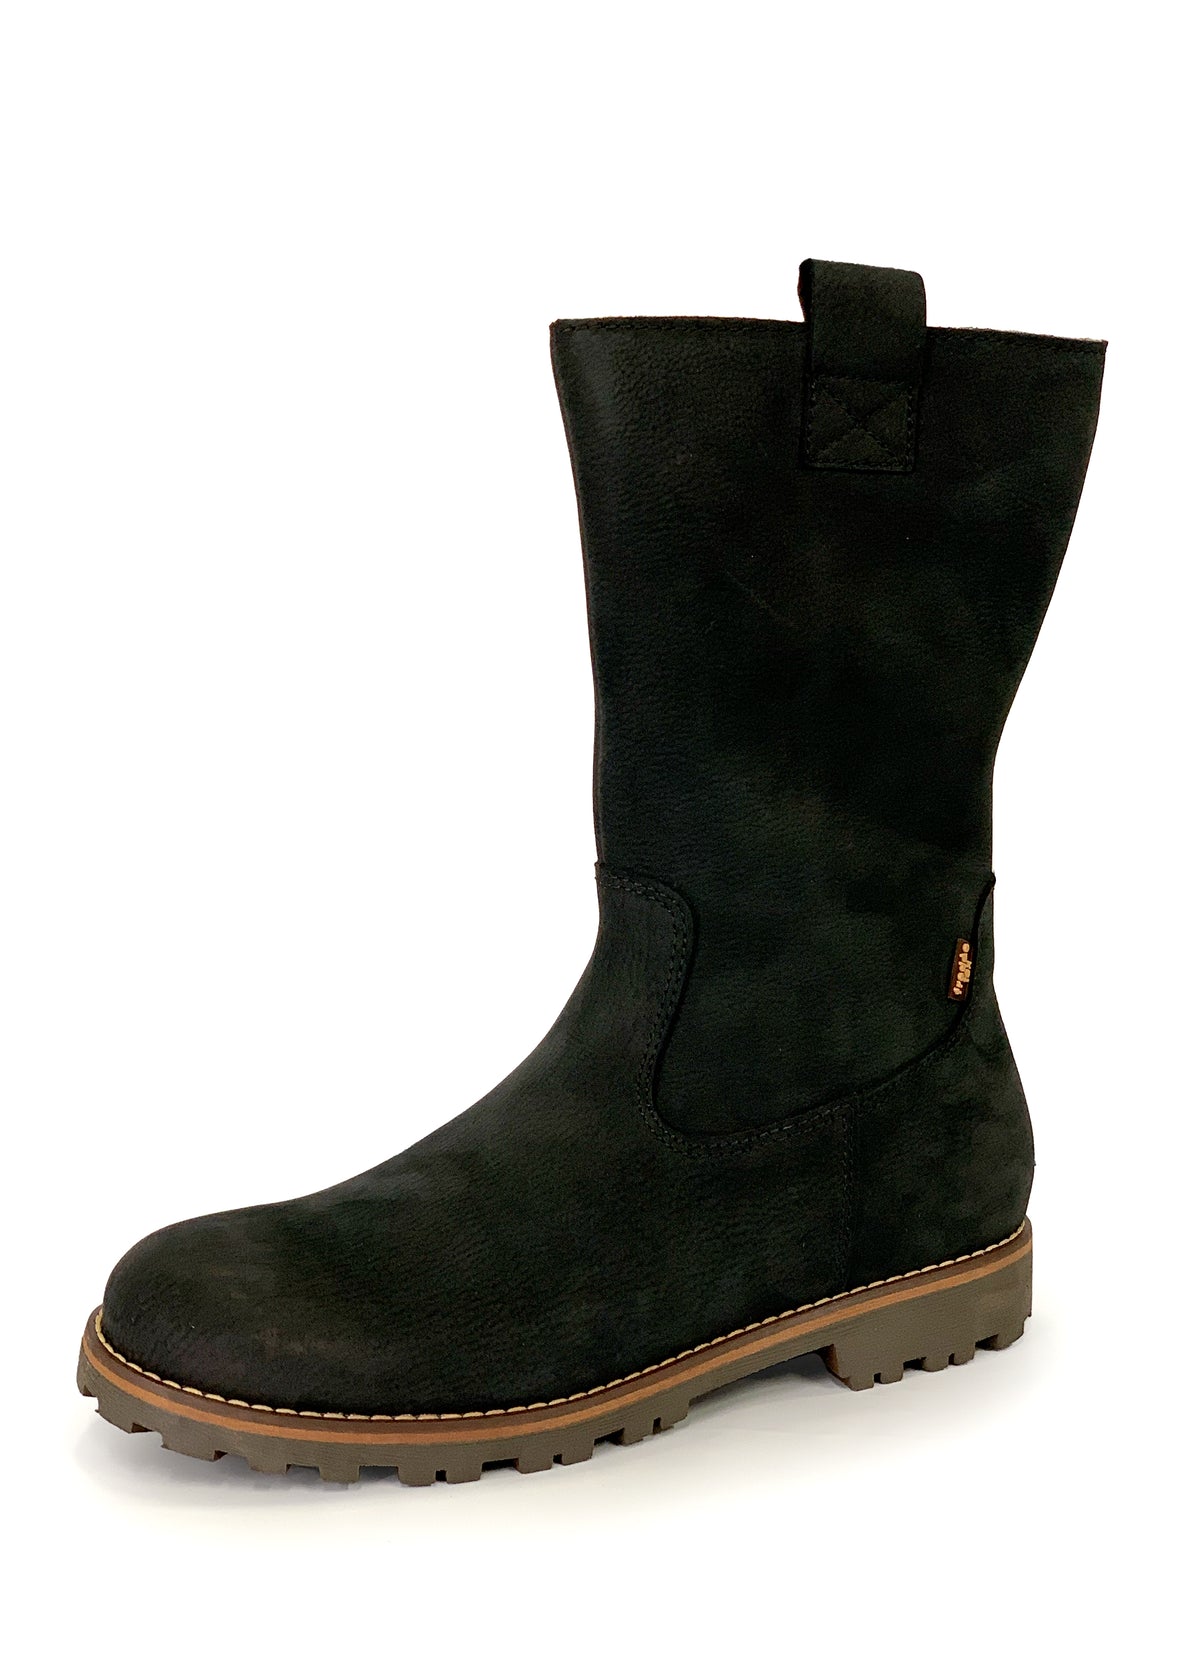 Winter boots - black, Froddo-TEX